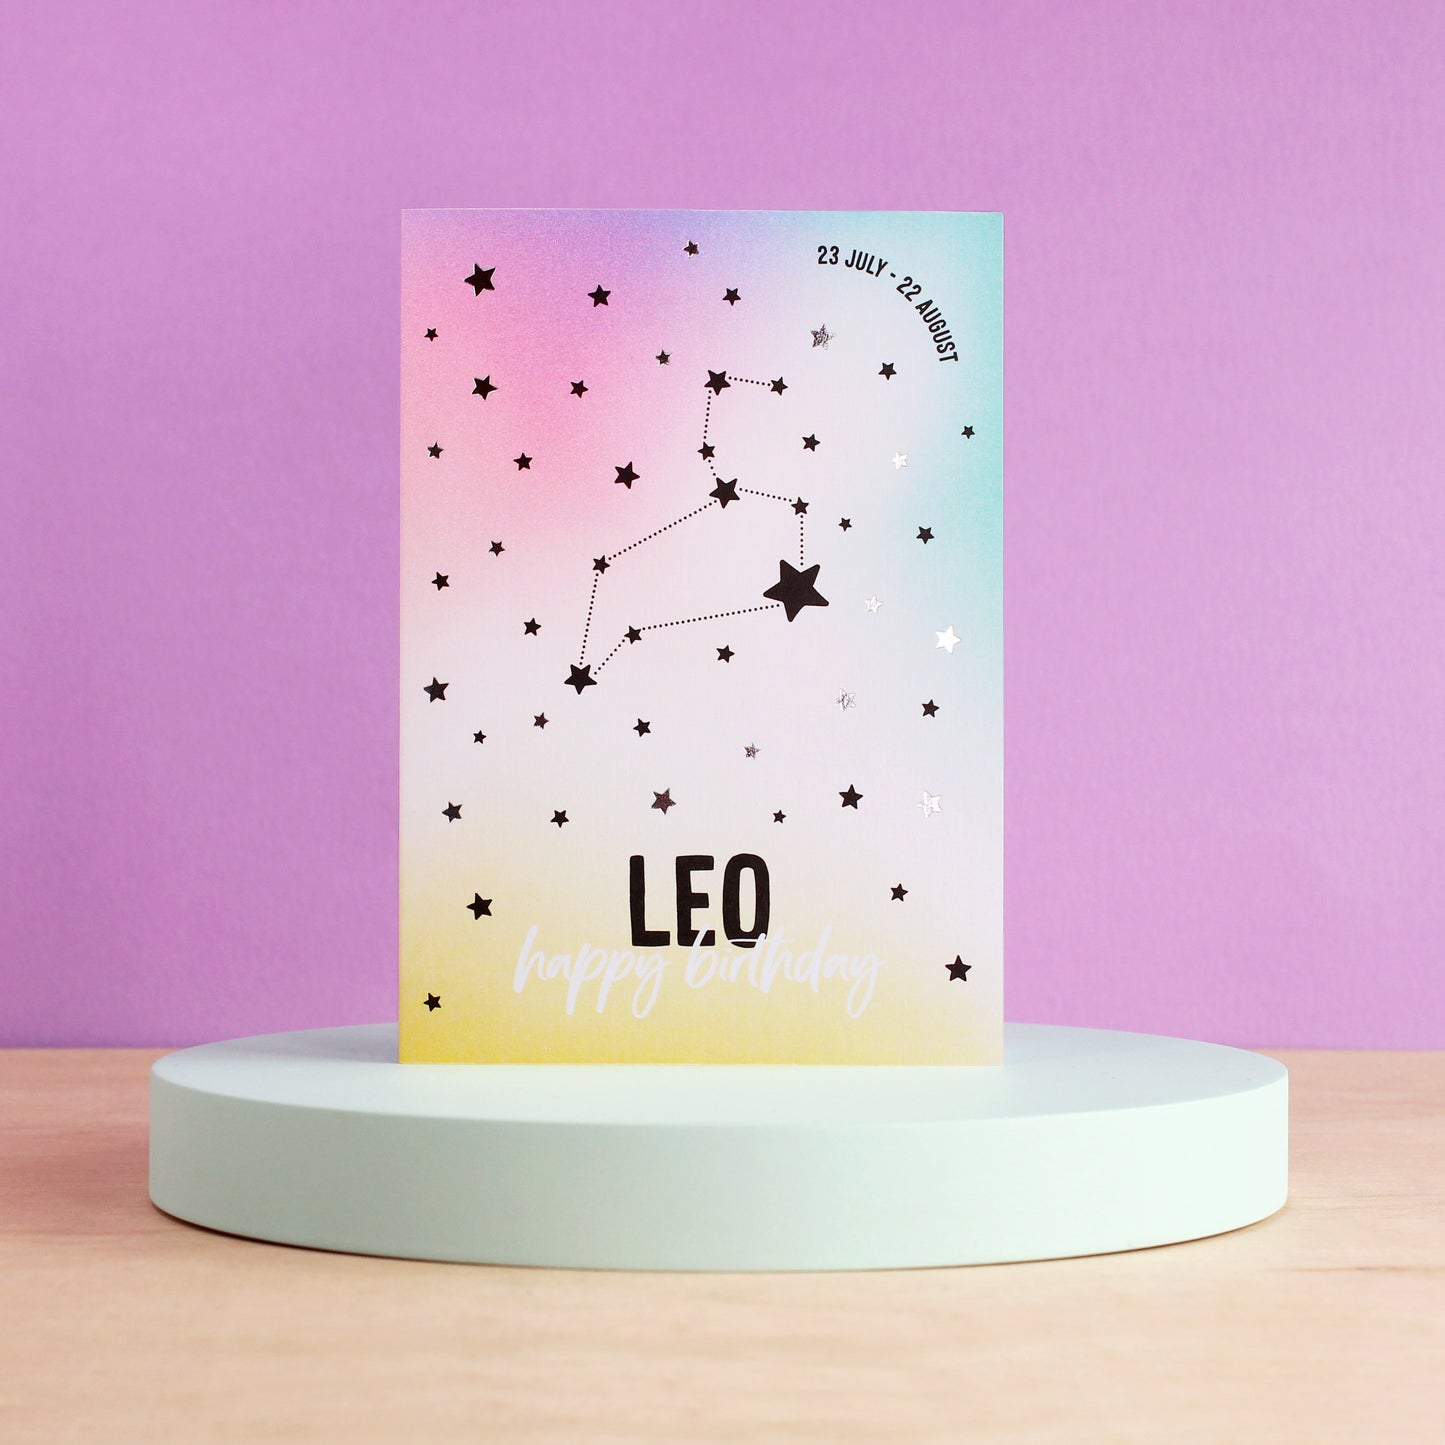 Leo birthday card